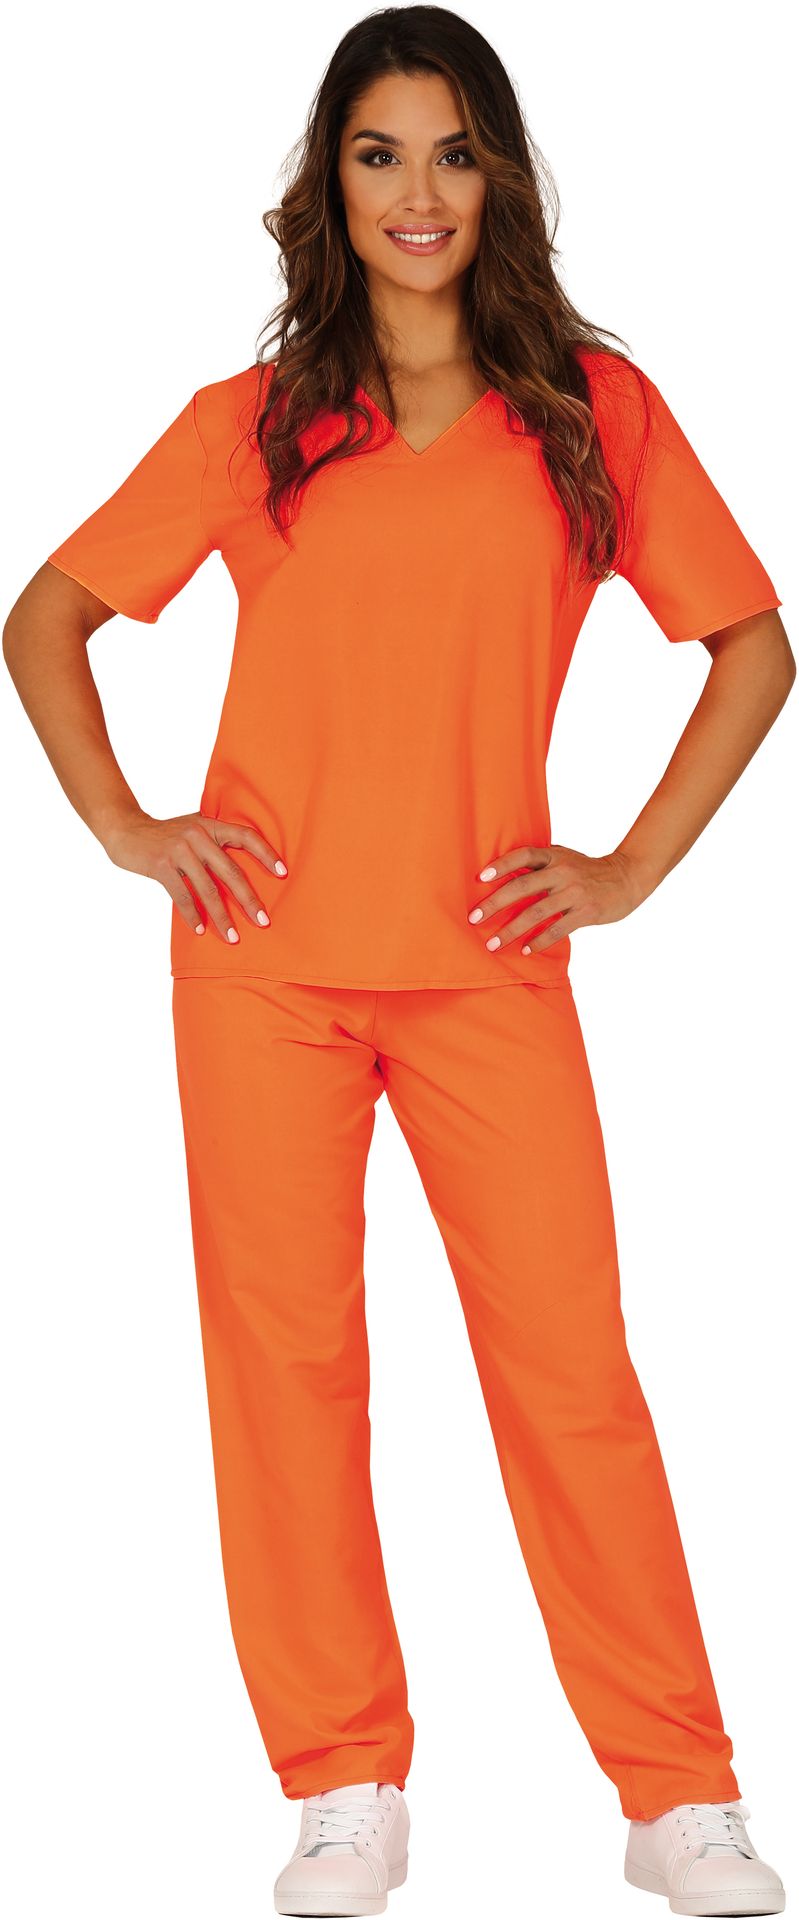 Orange is the new black overall